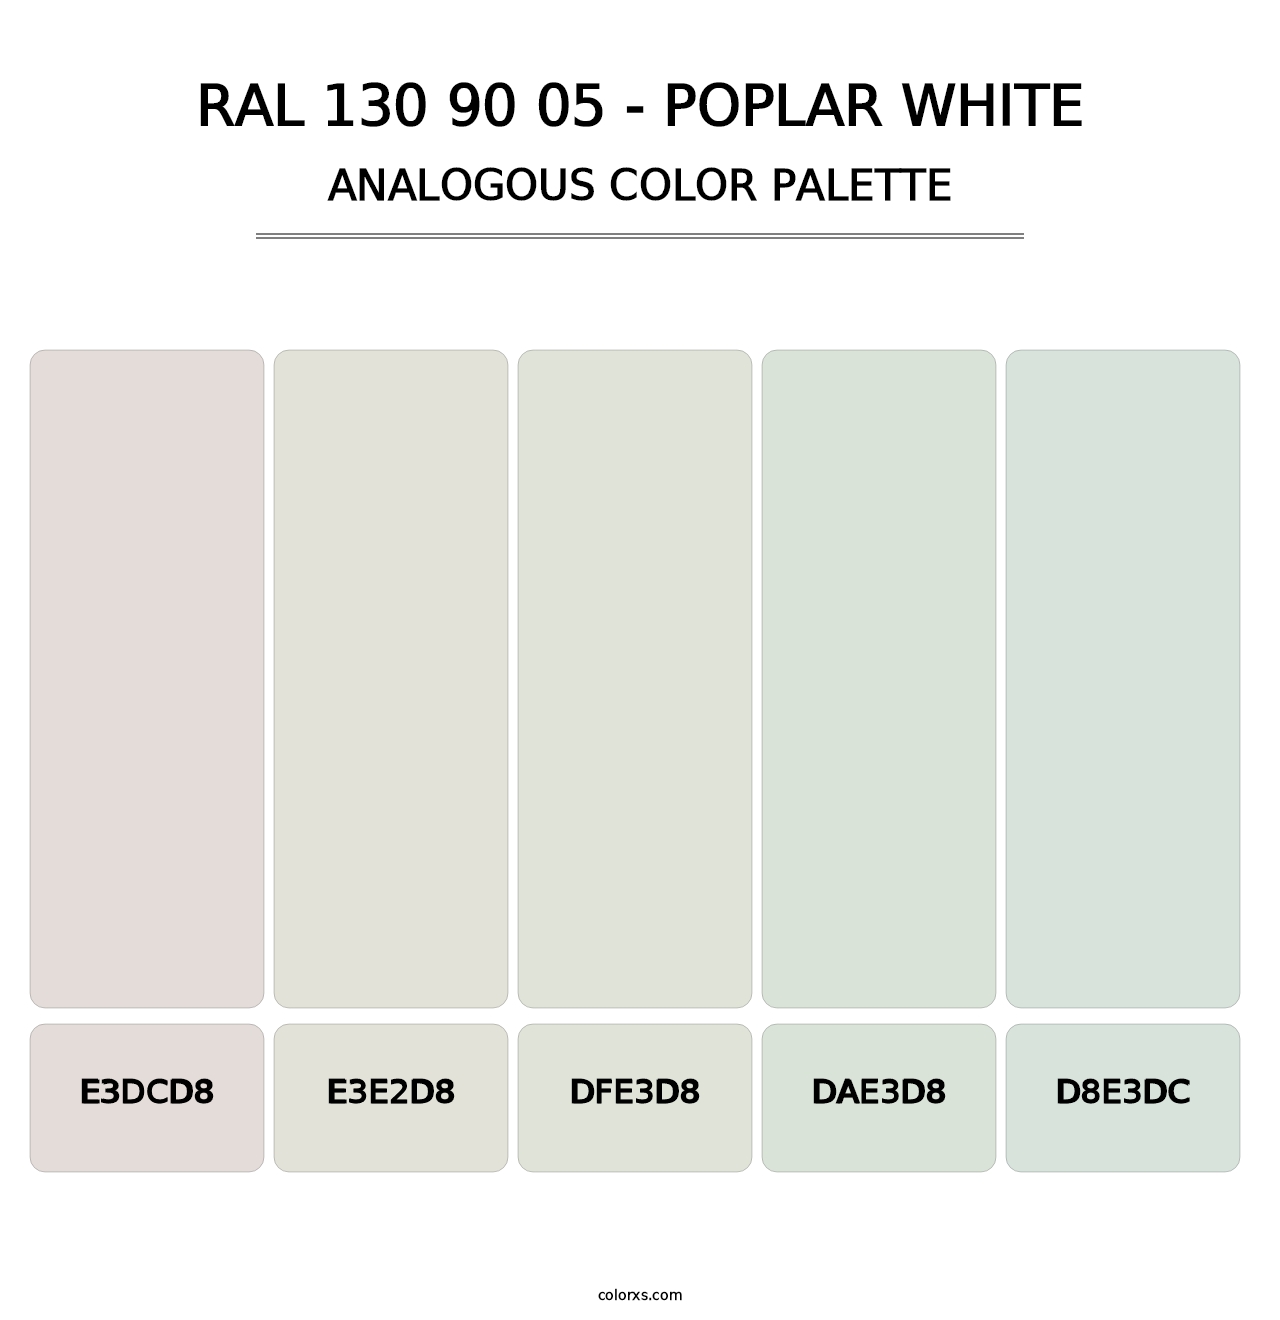 RAL 130 90 05 - Poplar White - Analogous Color Palette